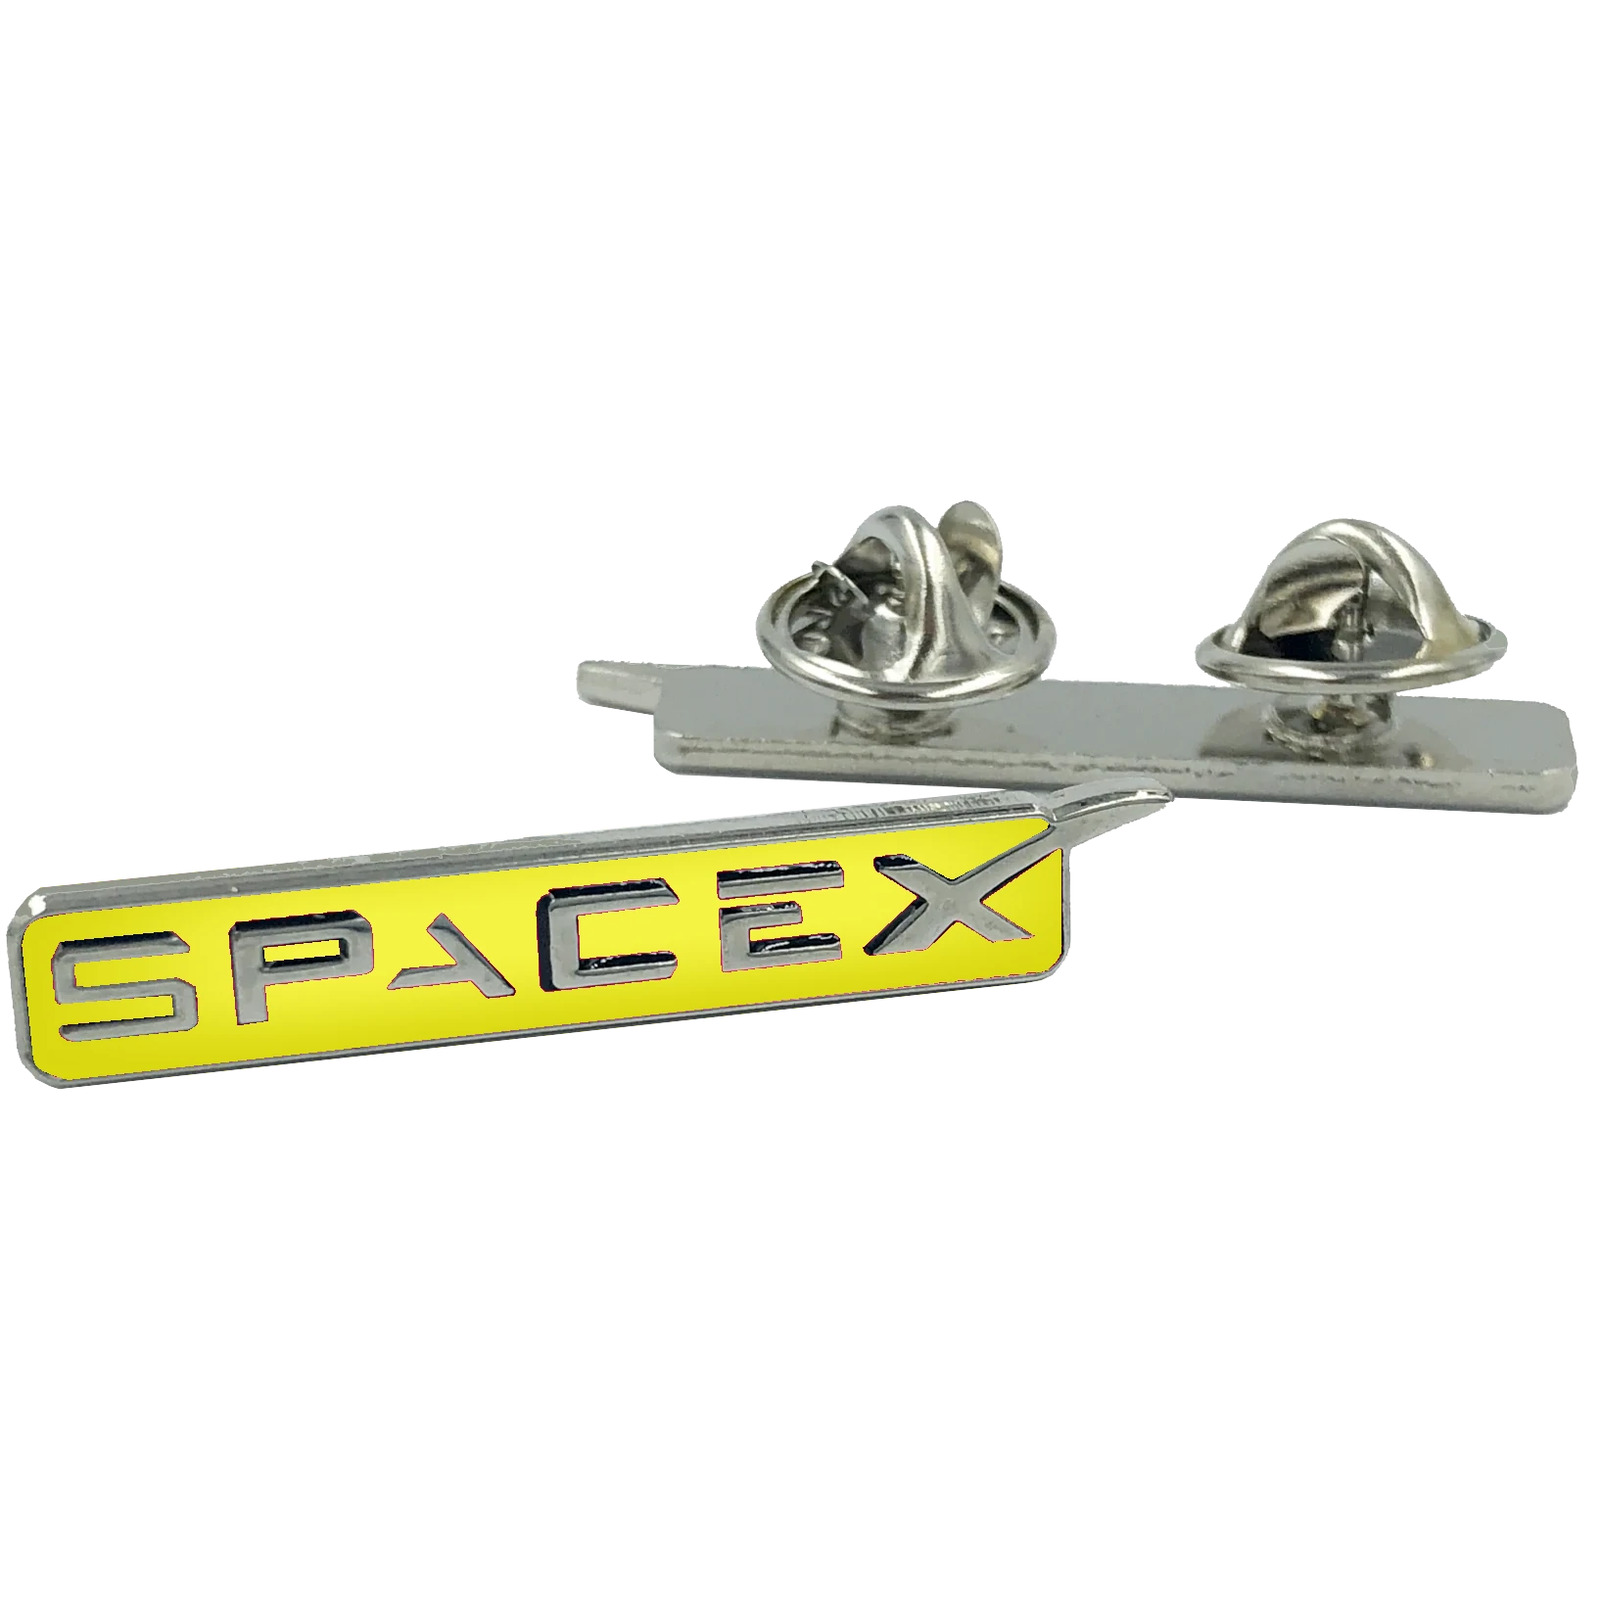 M-33 SpaceX pin Space X dual pin back yellow lapel pin